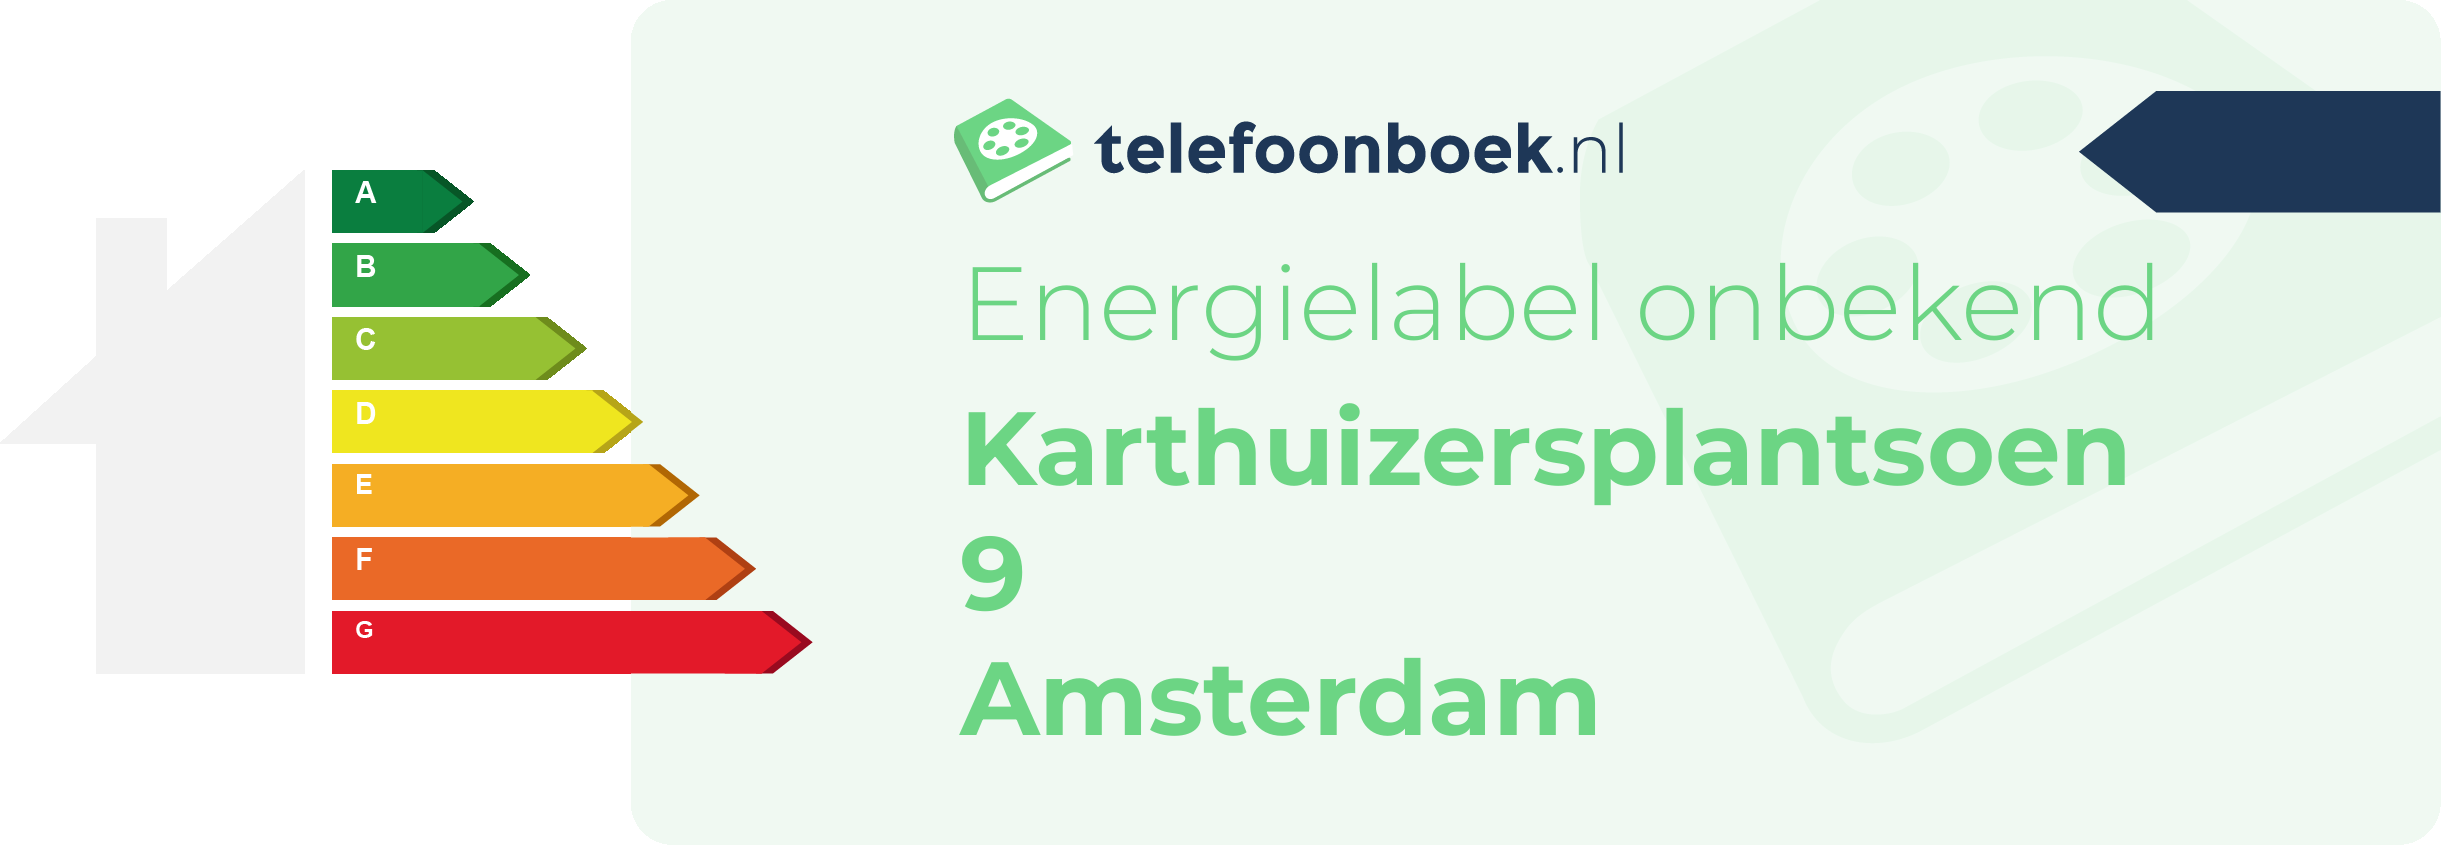 Energielabel Karthuizersplantsoen 9 Amsterdam